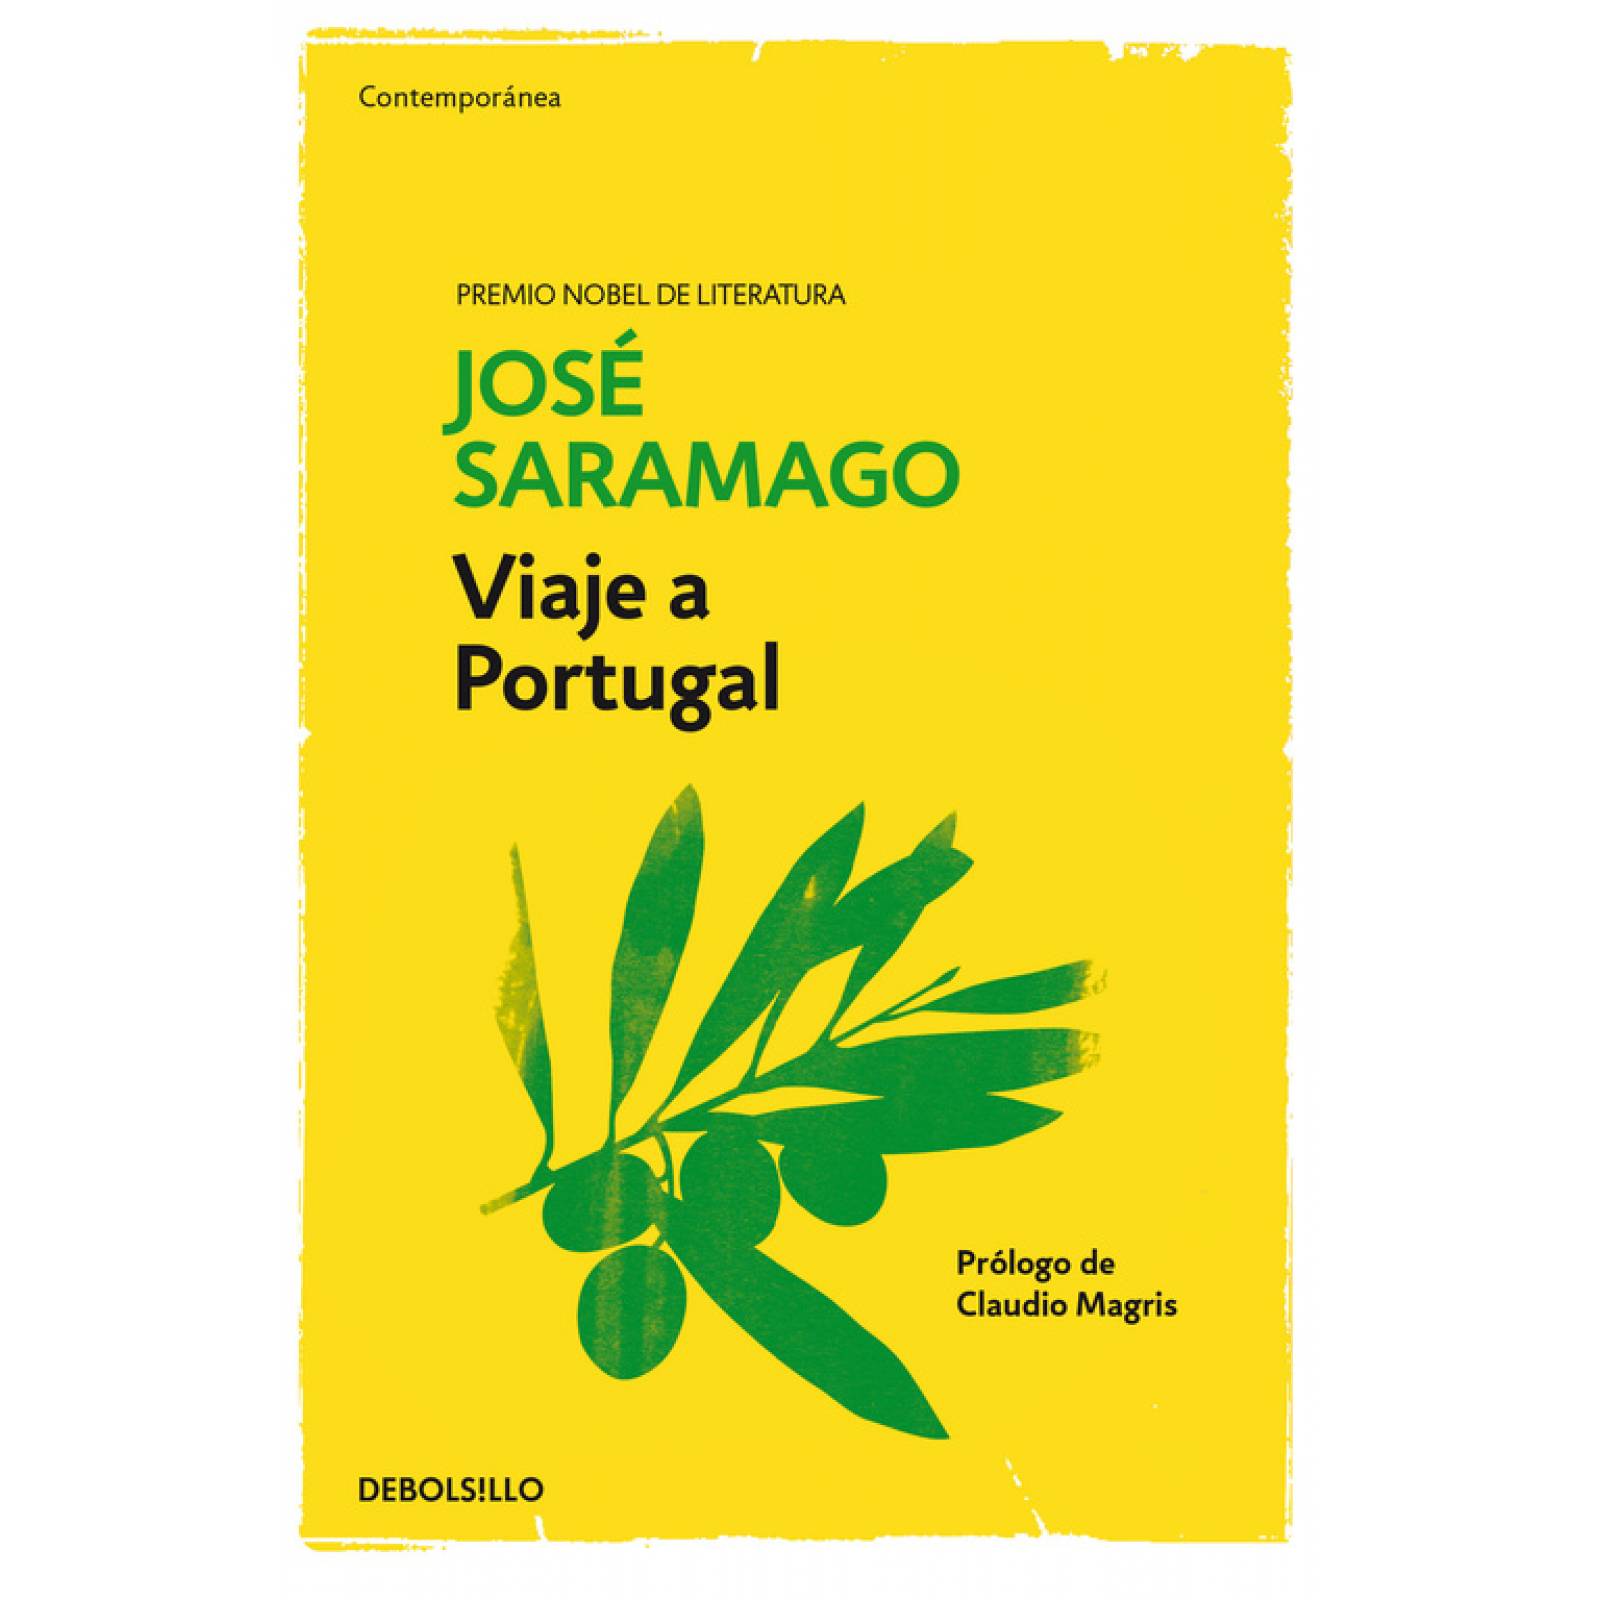 Viaje a PortugalAutorSaramago, José